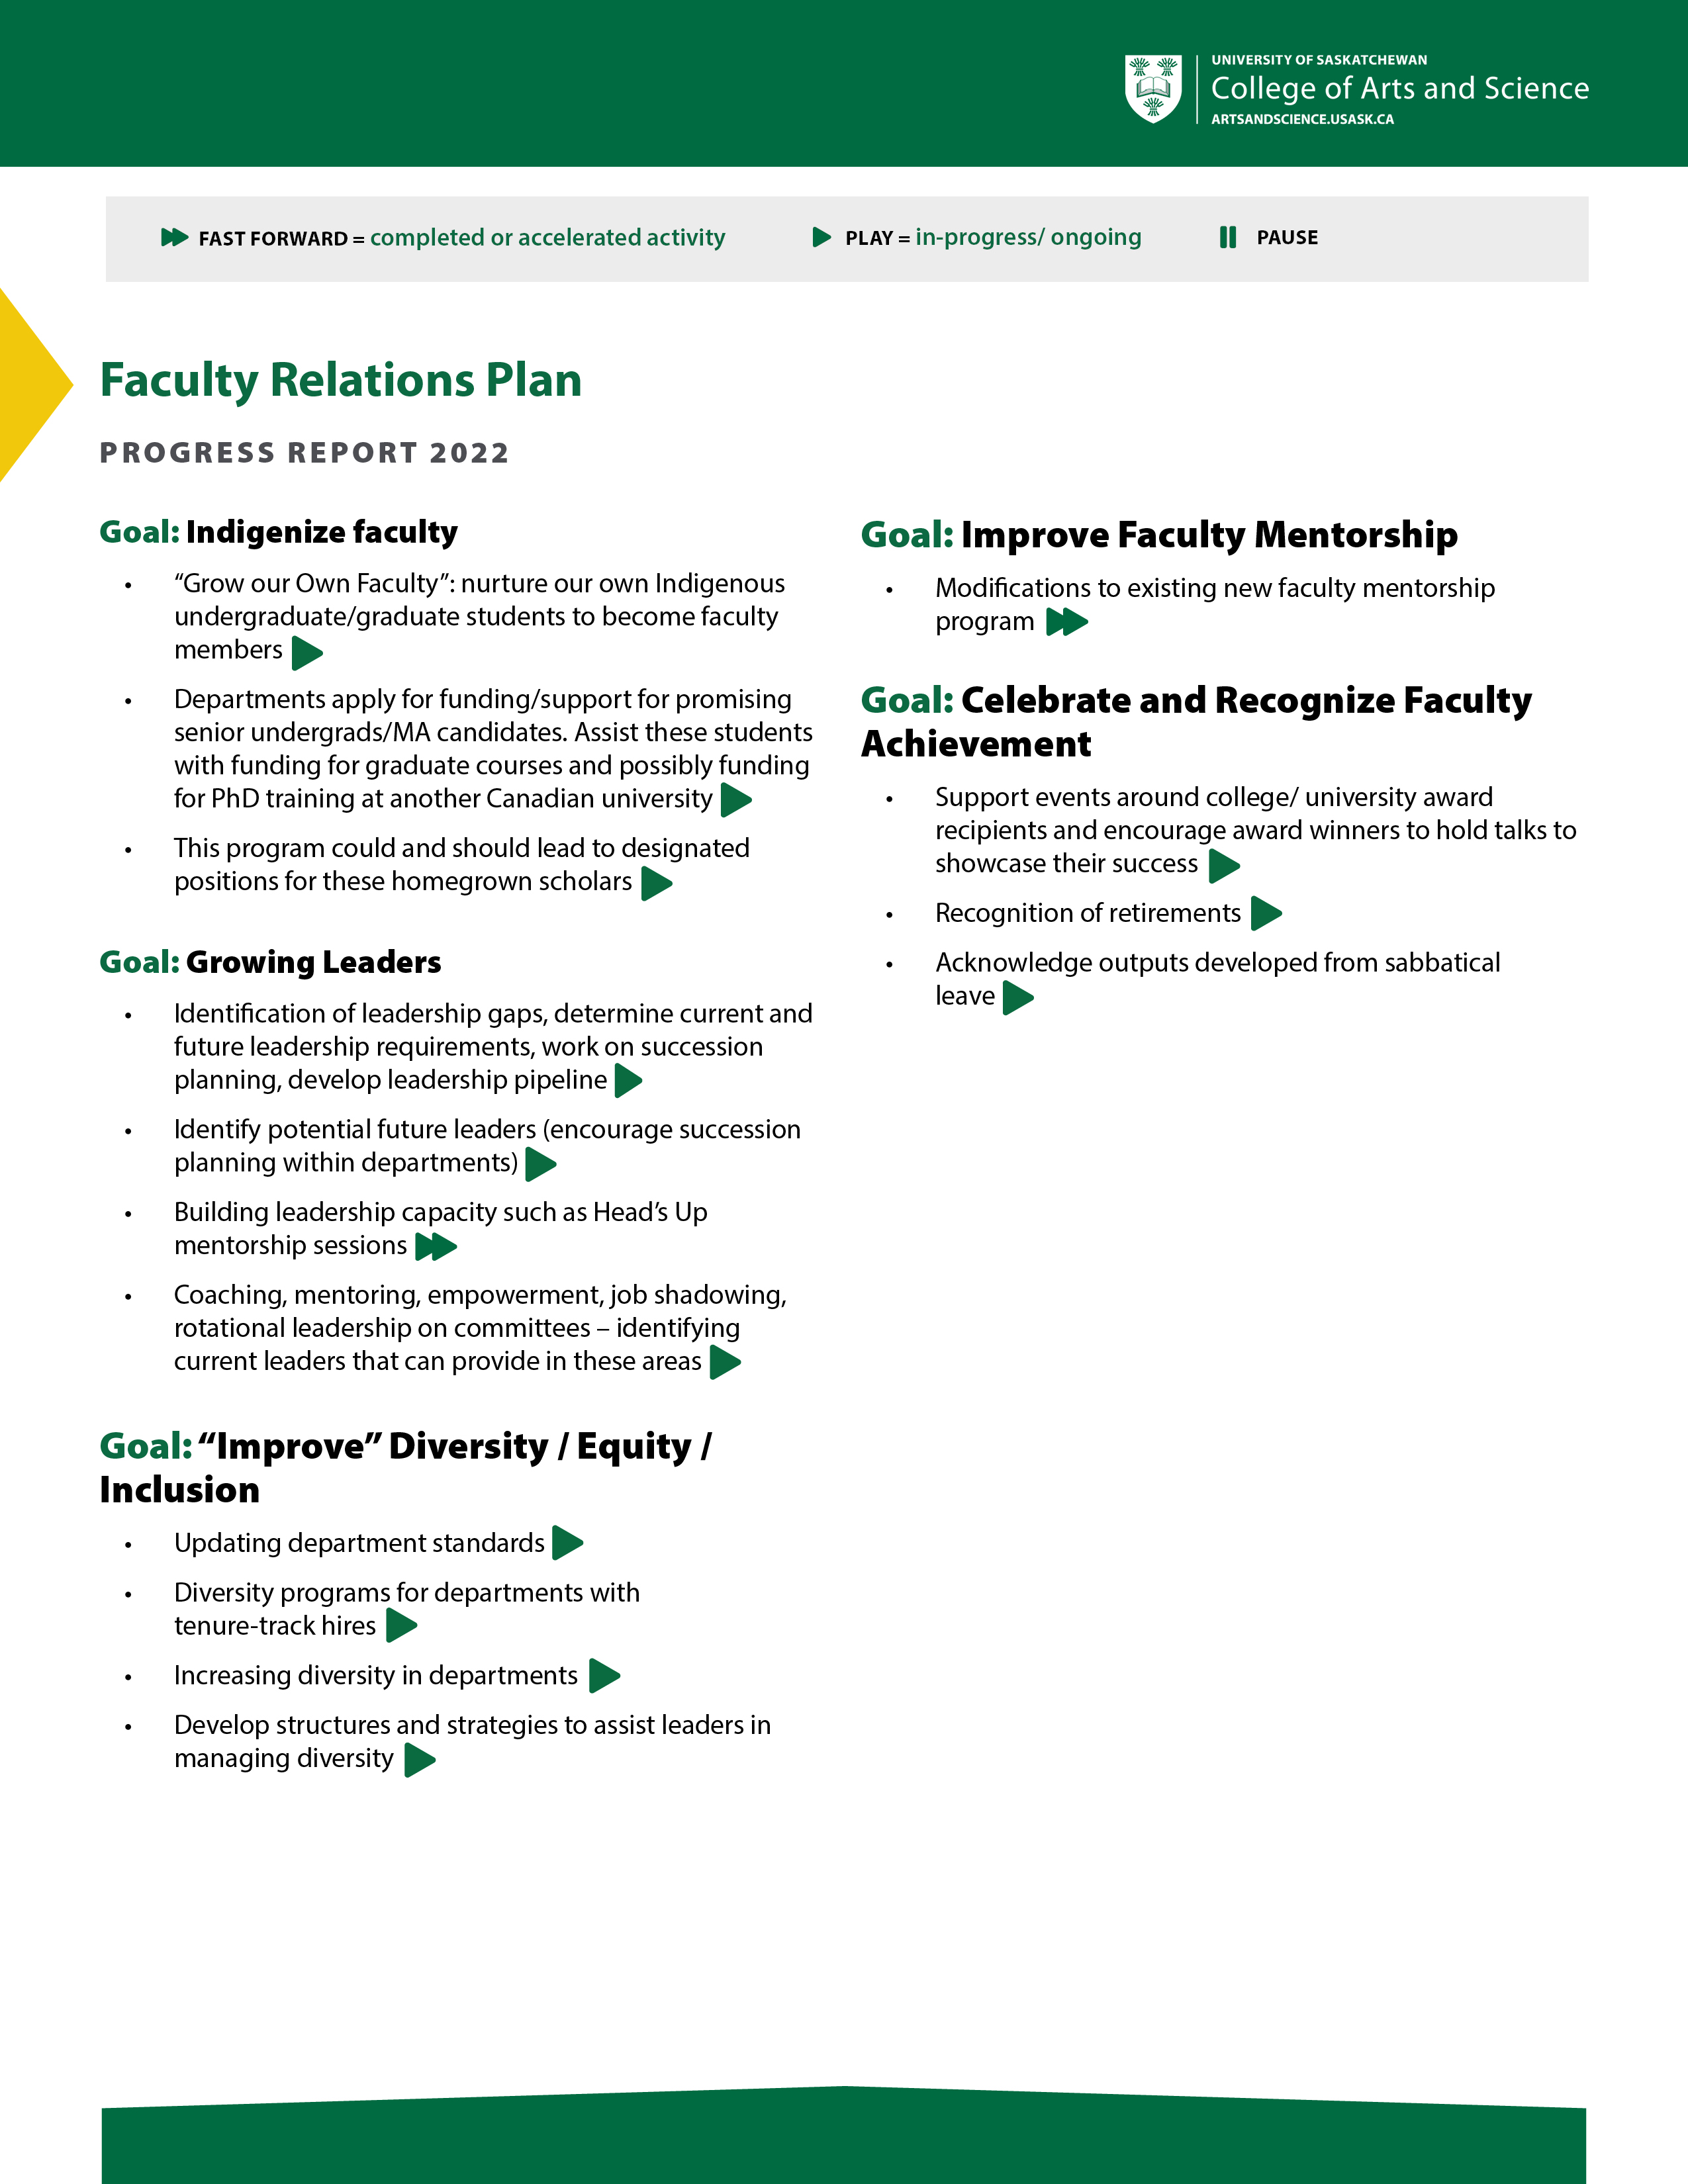 faculty-relations-plan.jpg